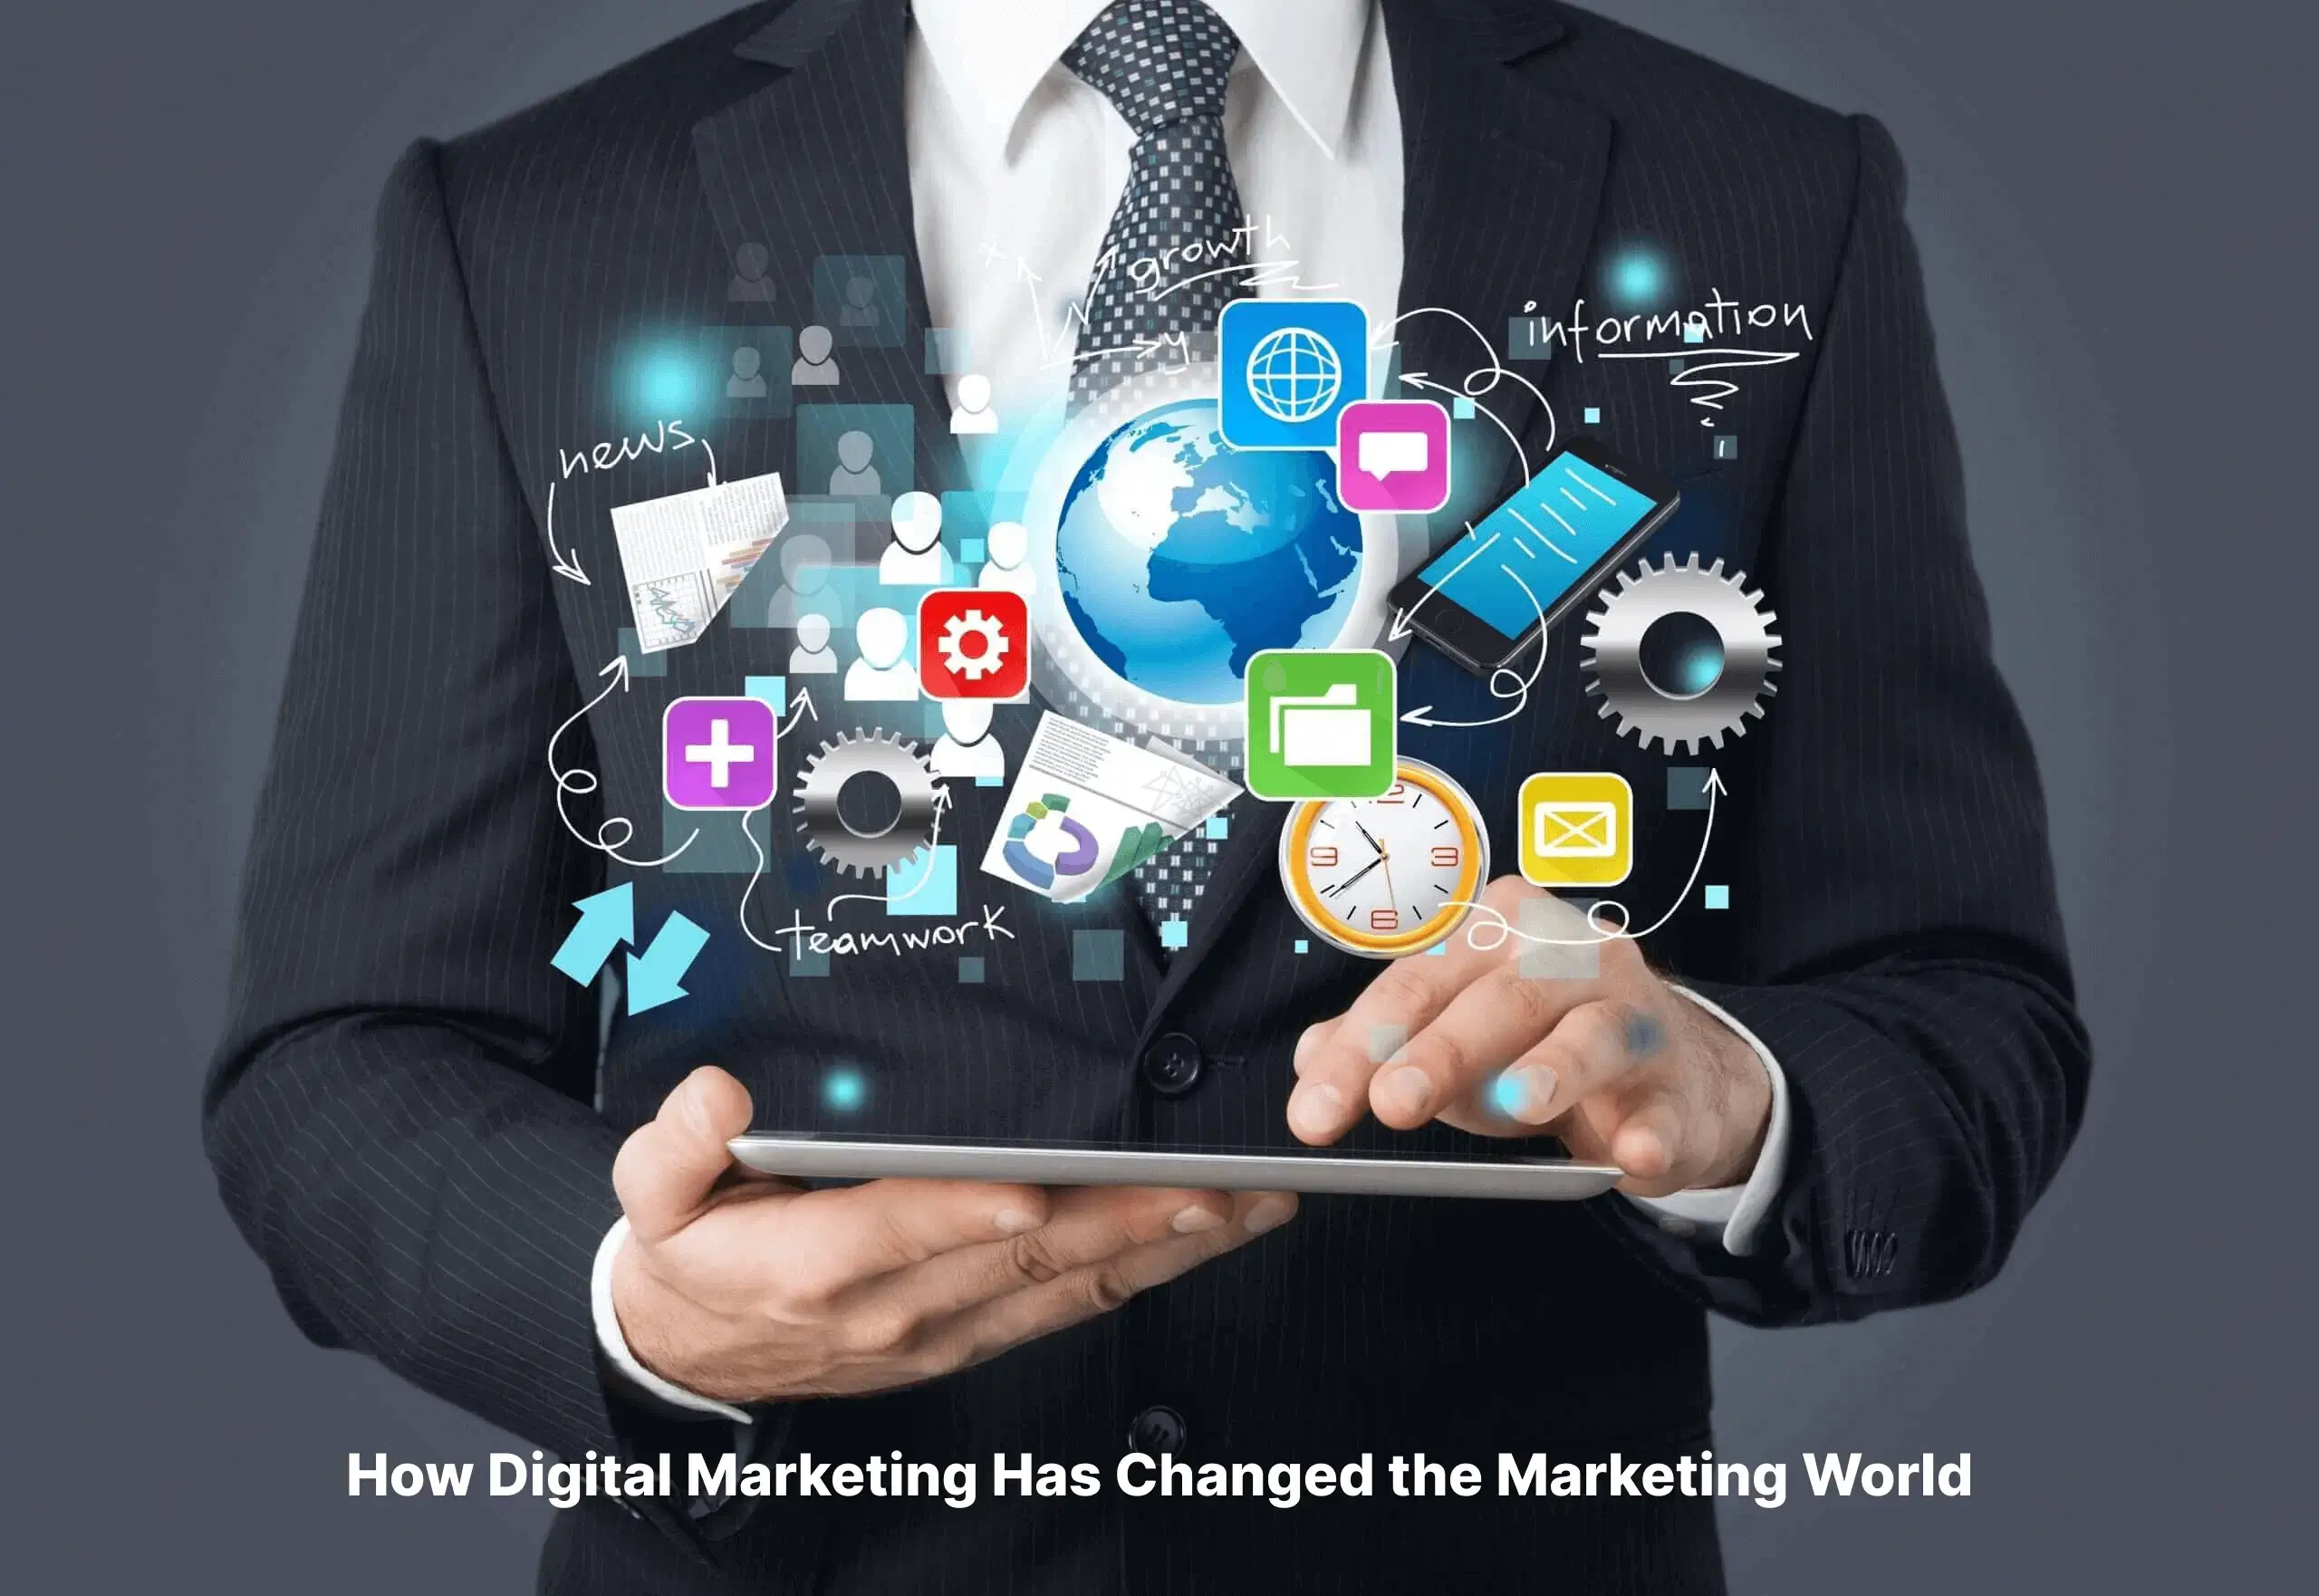 Digital Marketing Has Changed the Marketing World